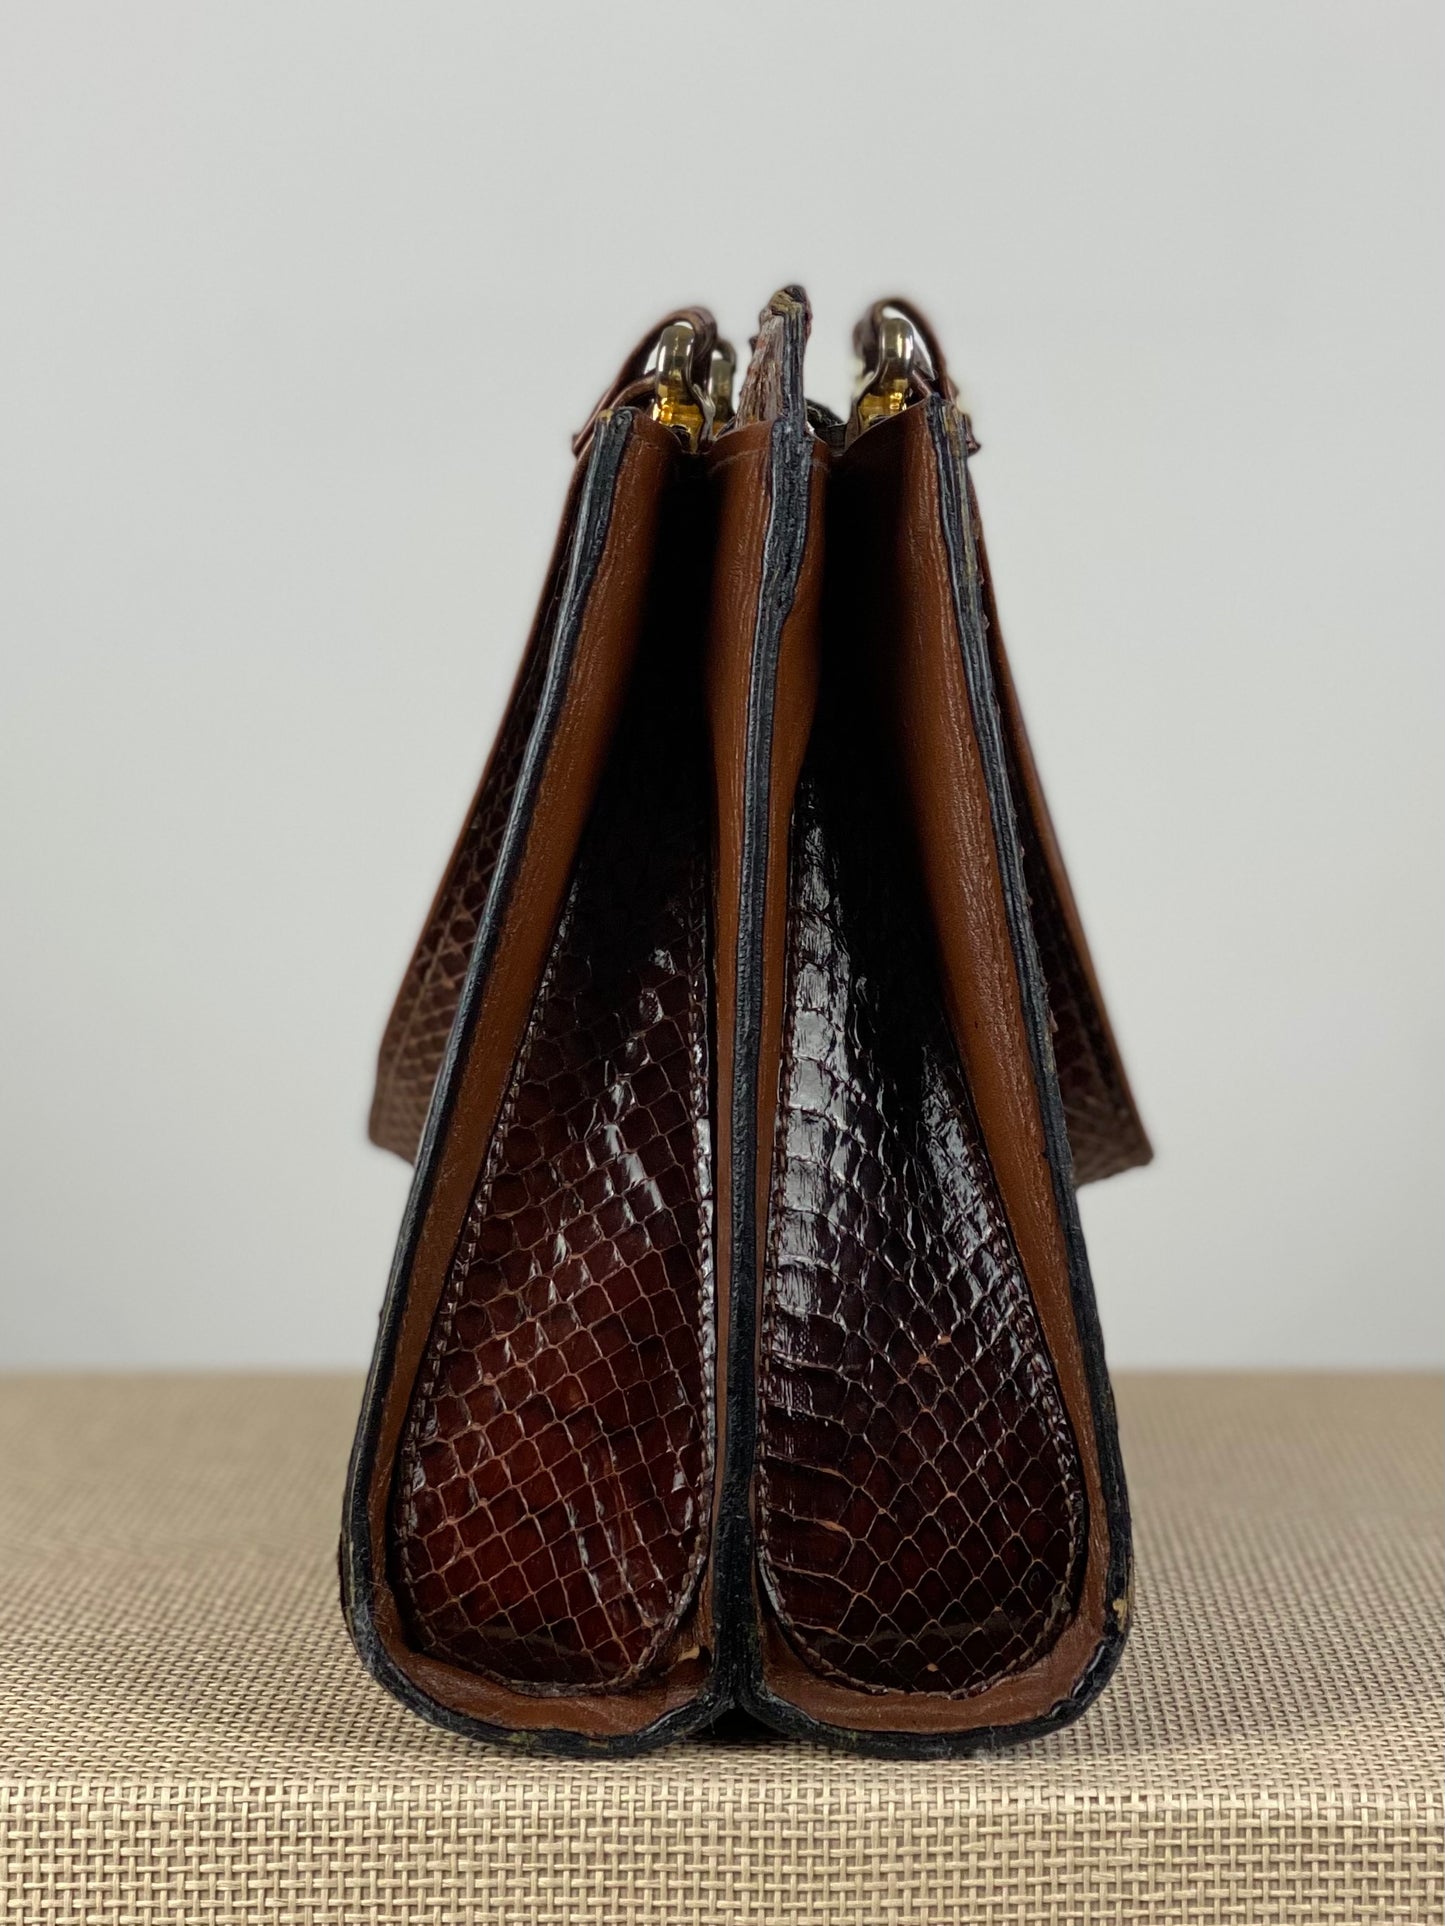 Vintage Real Reptile Brown Handbag